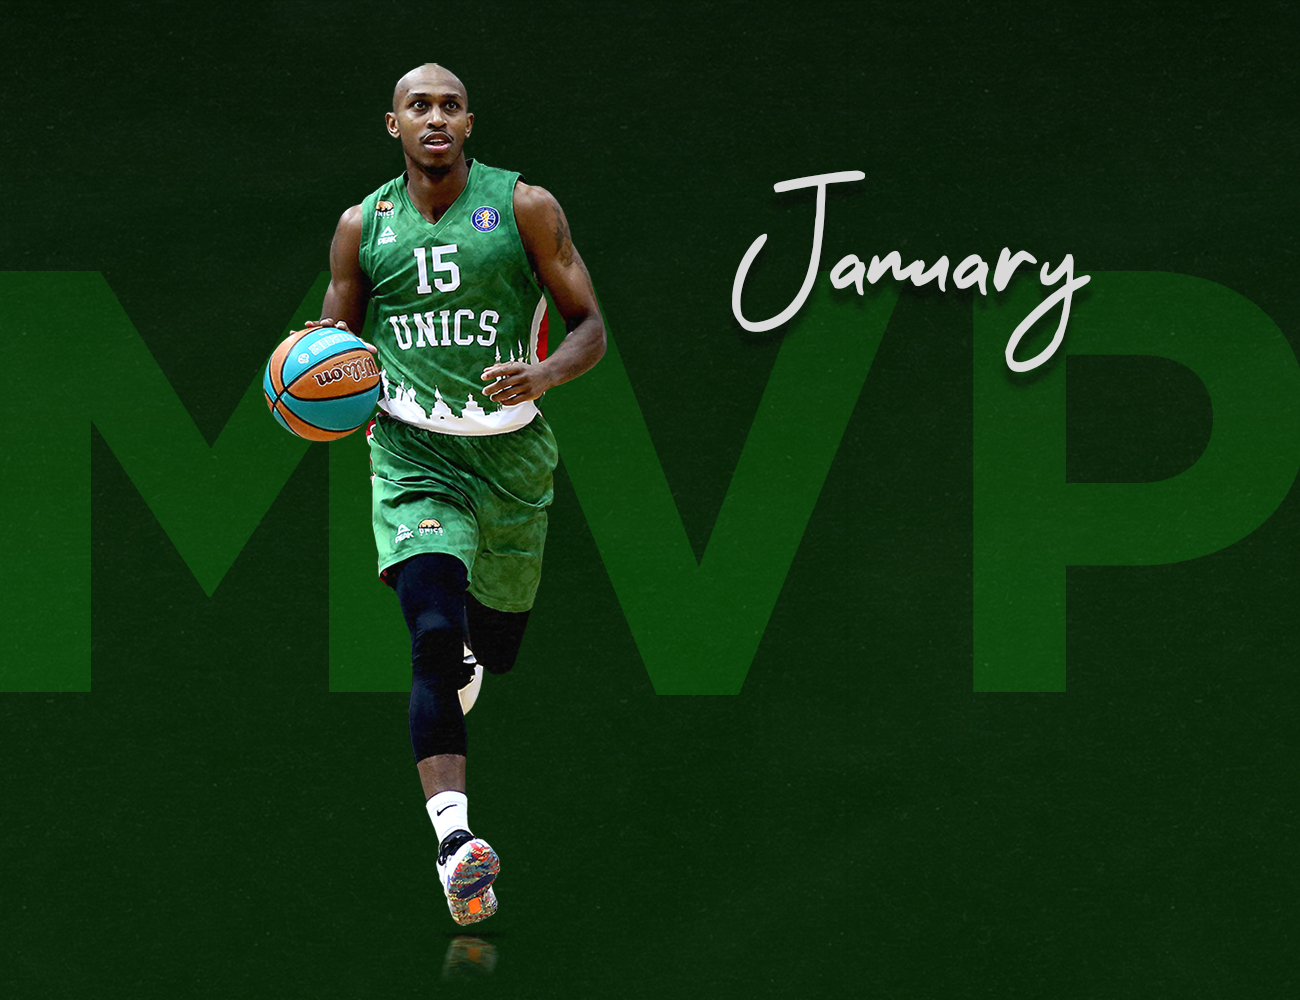 Jamar Smith named January MVP